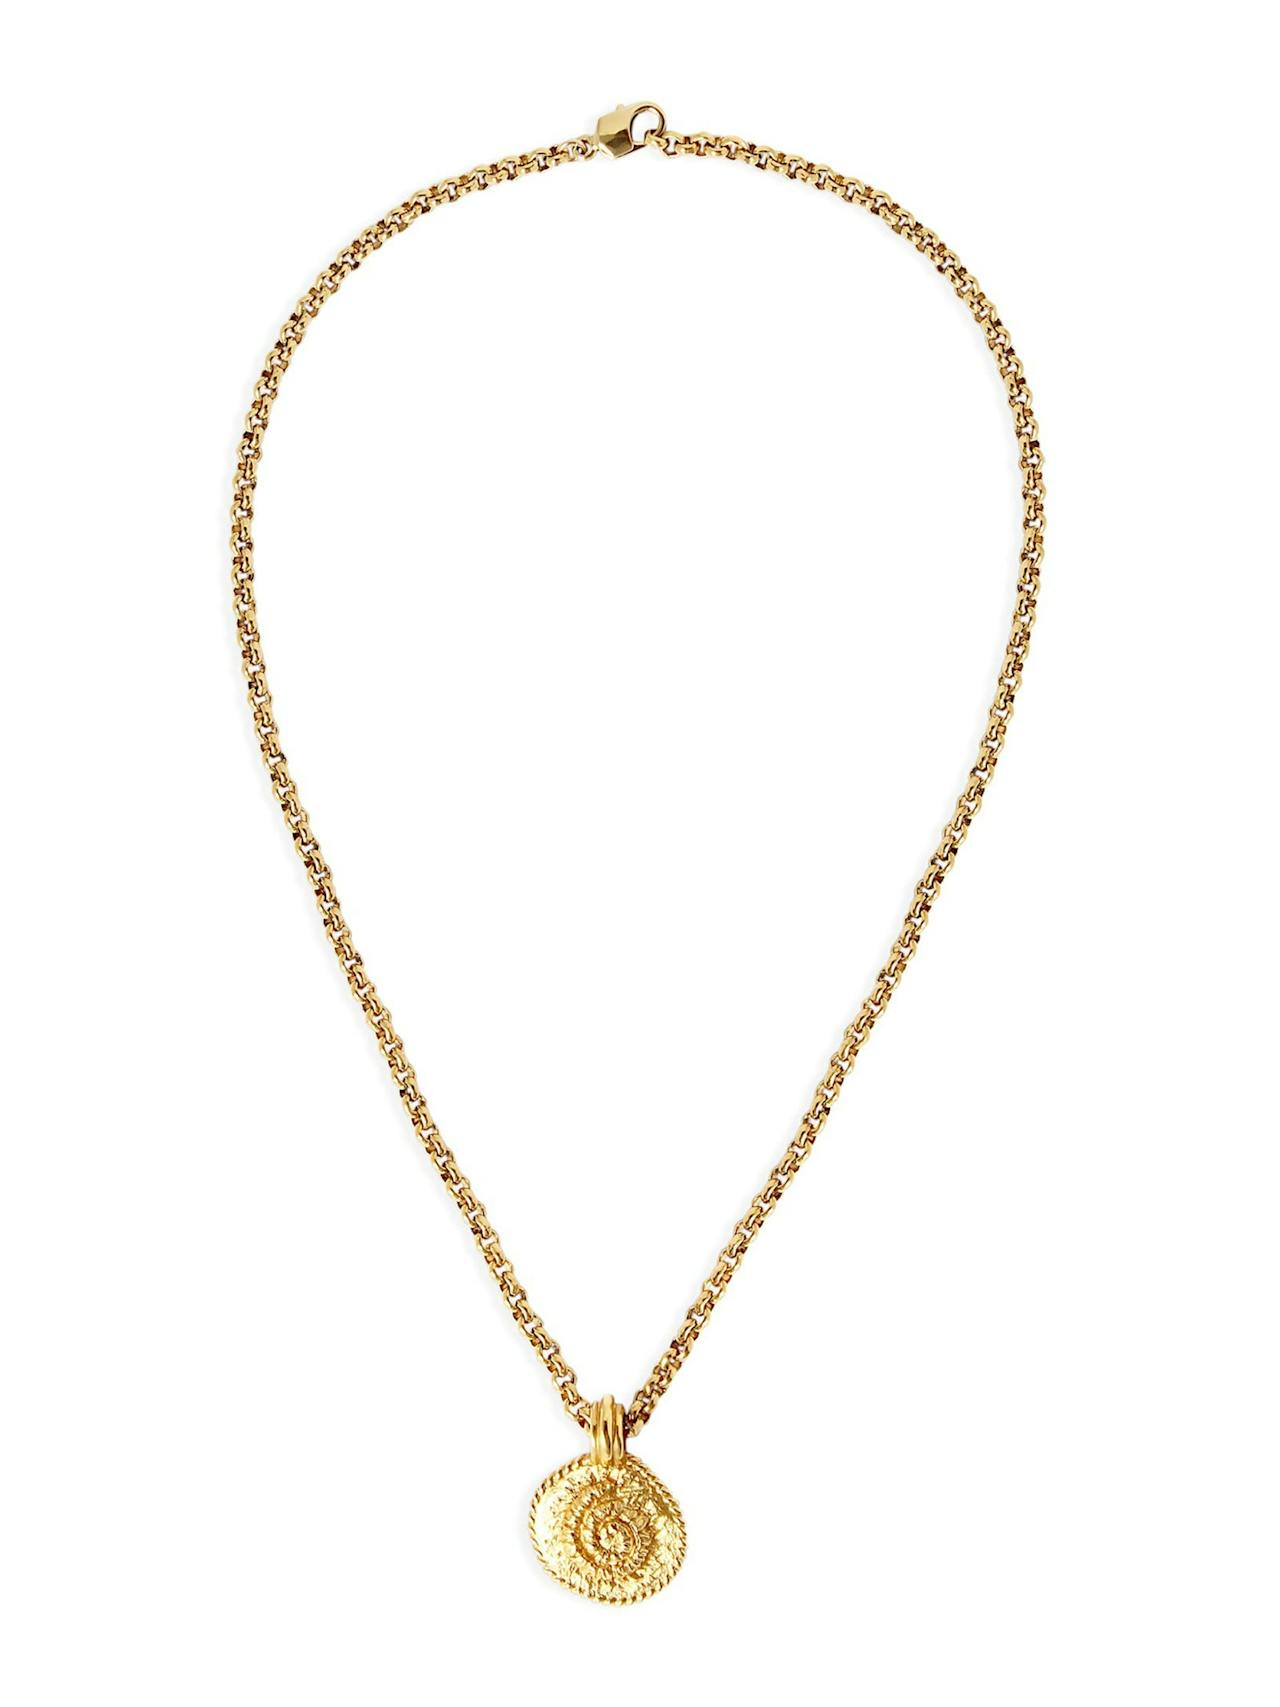 Gold Ammonite necklace